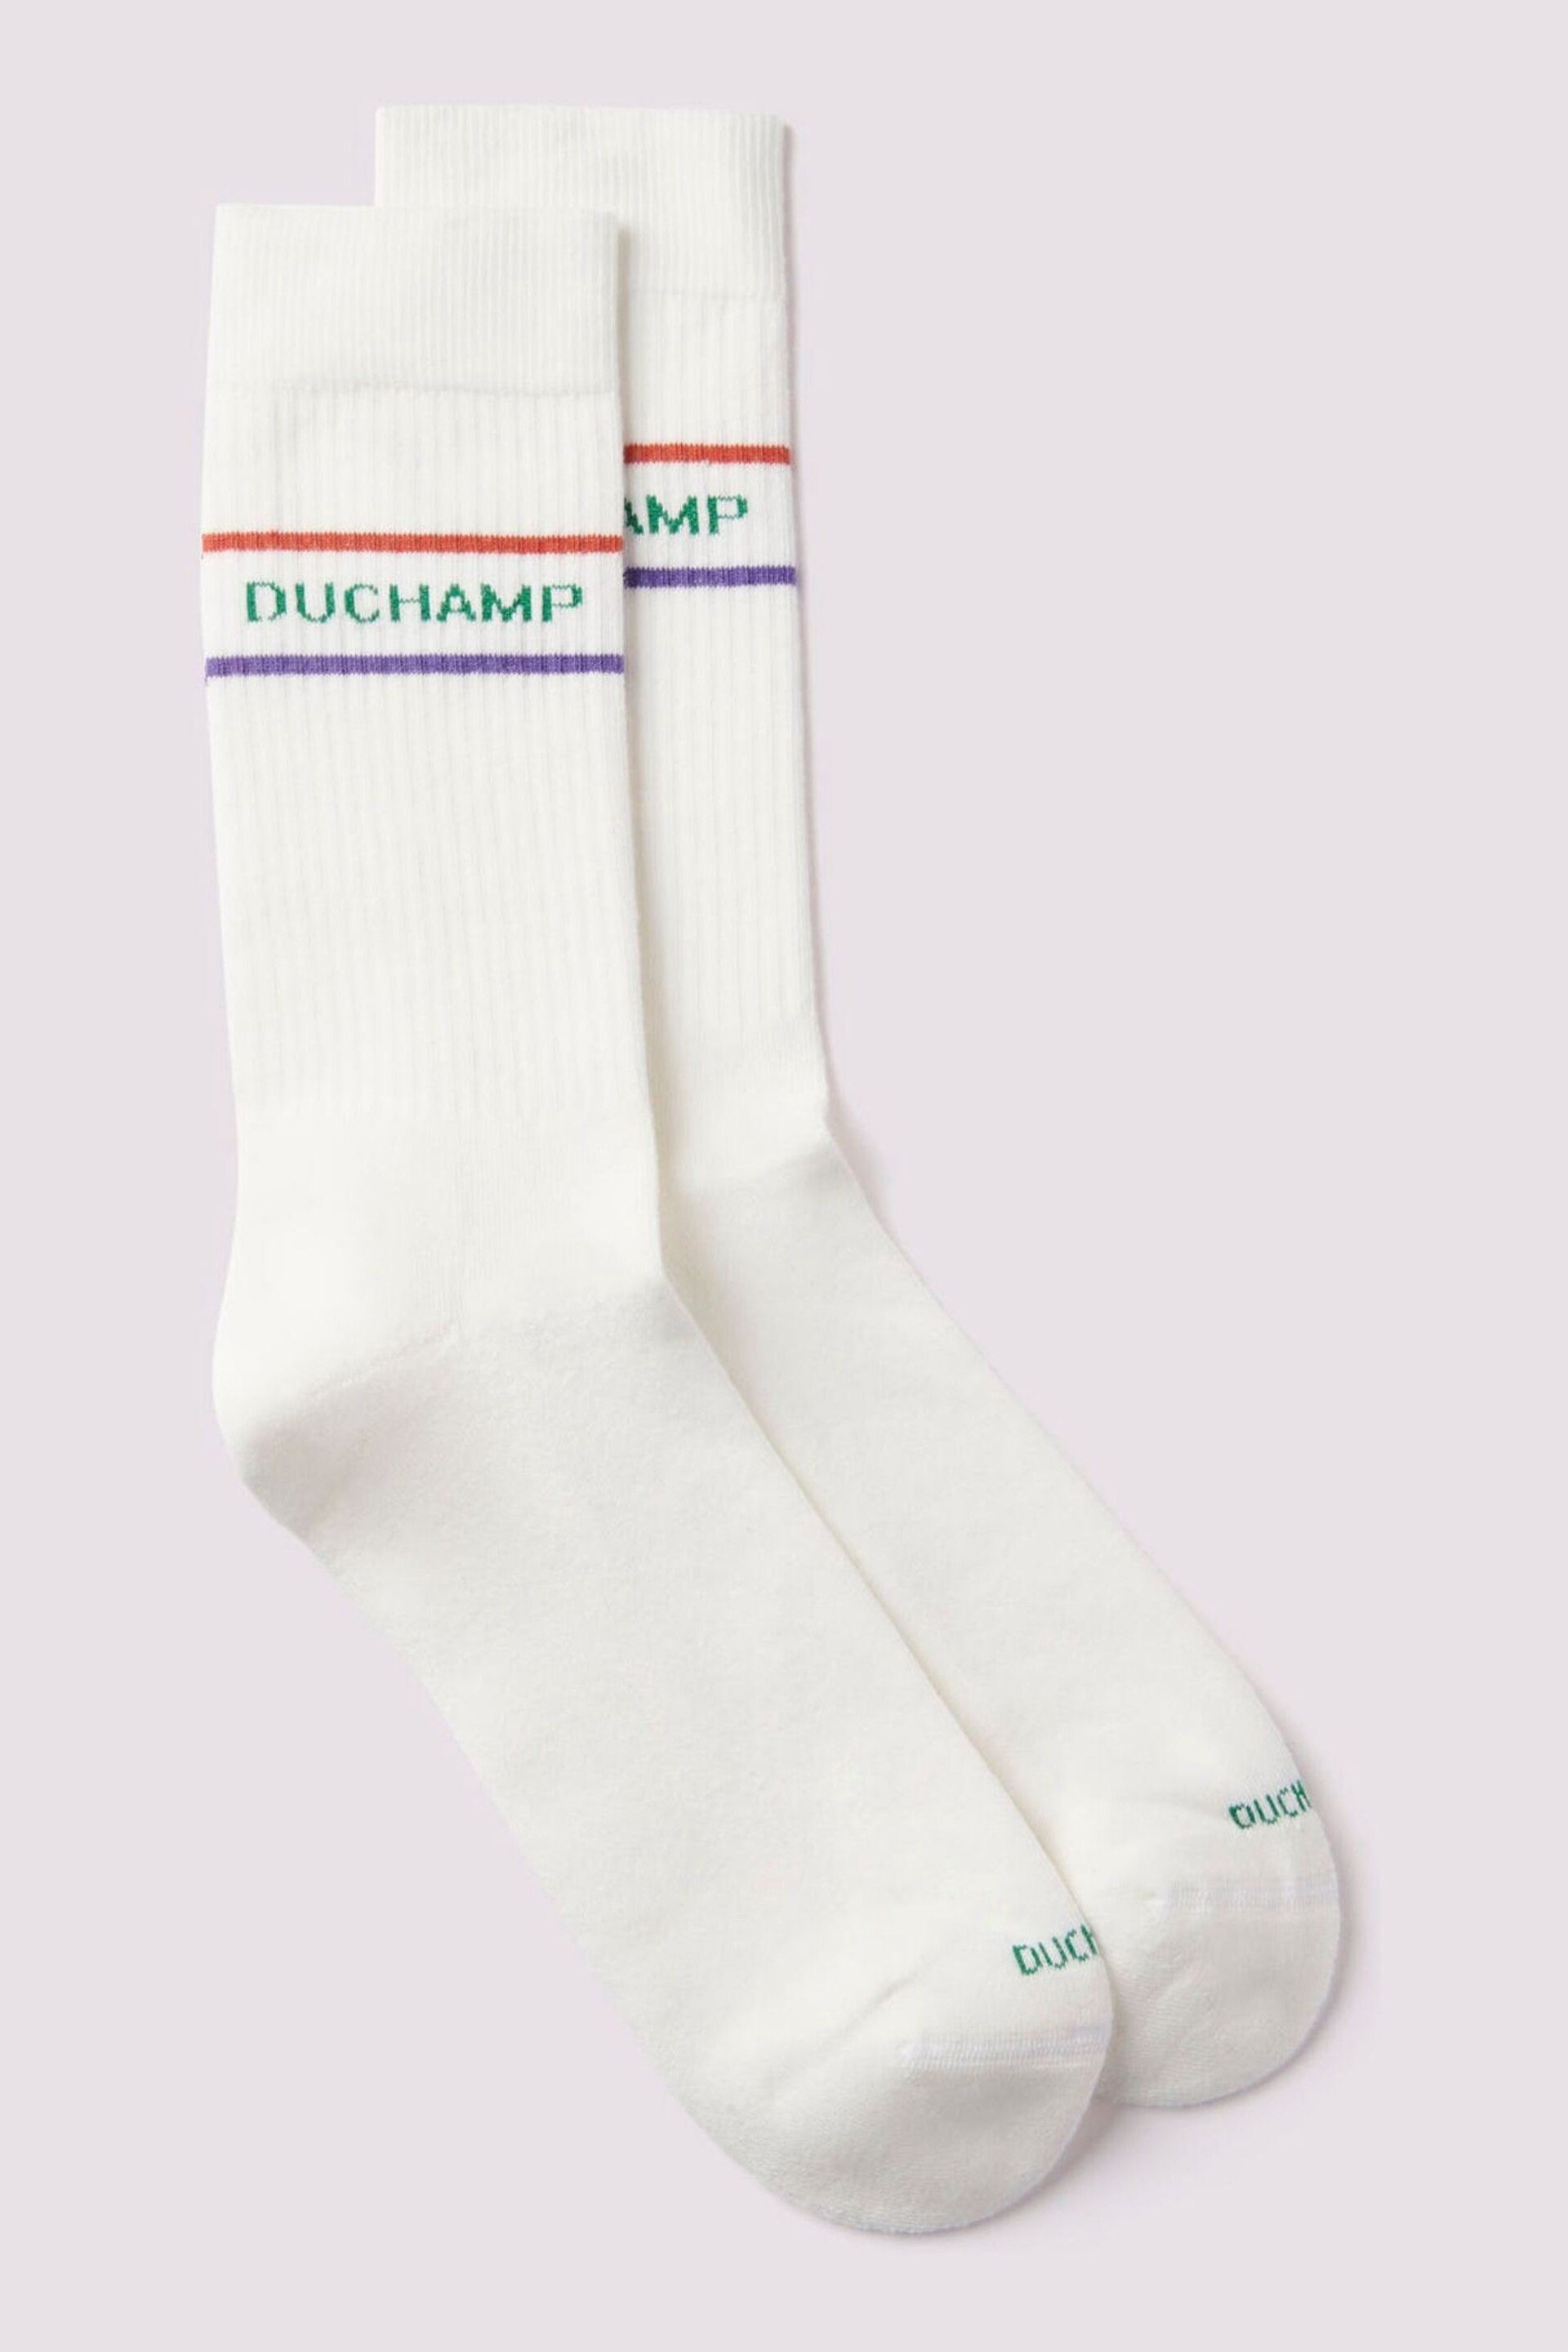 Duchamp Mens Sports Socks - Image 1 of 3